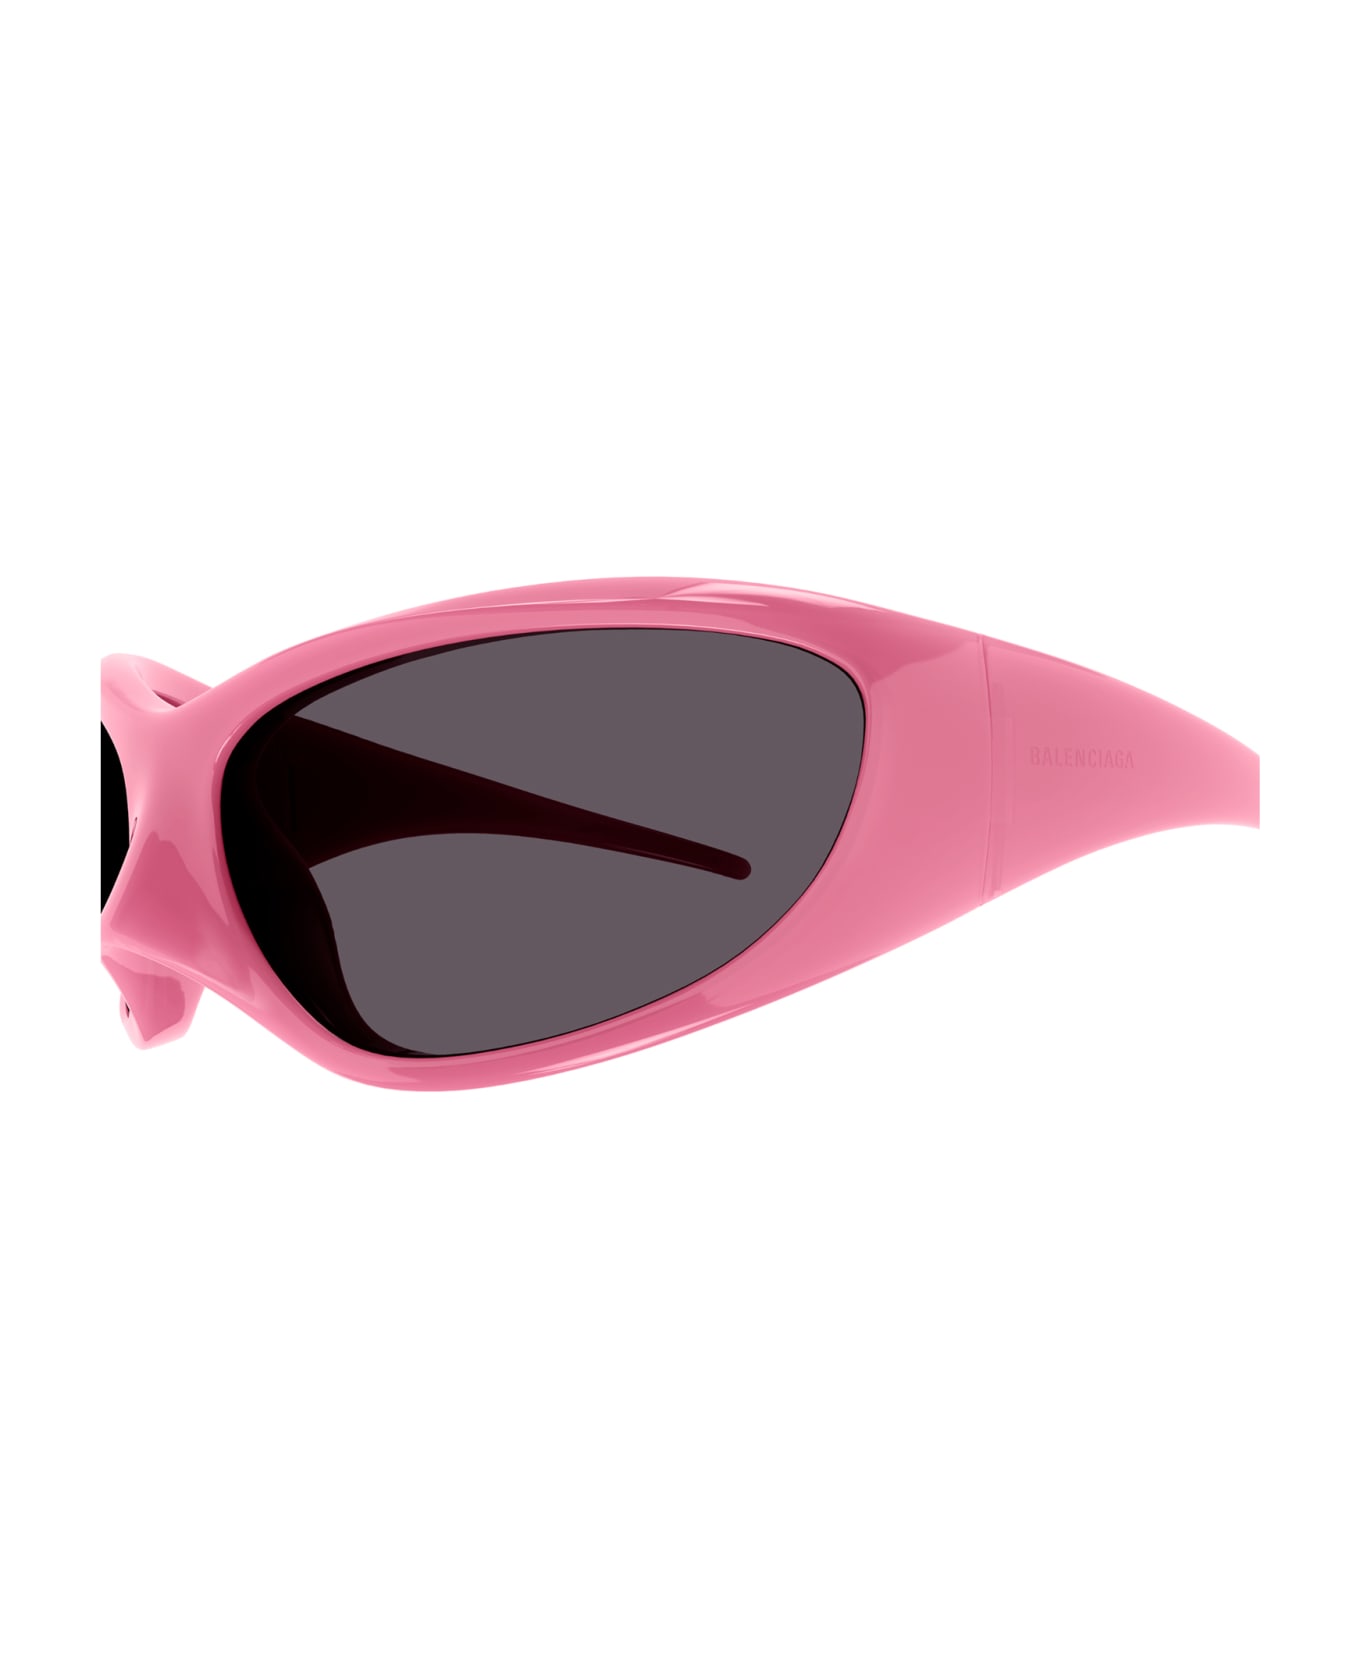 Balenciaga Eyewear BB0252S Sunglasses - Pink Pink Grey サングラス